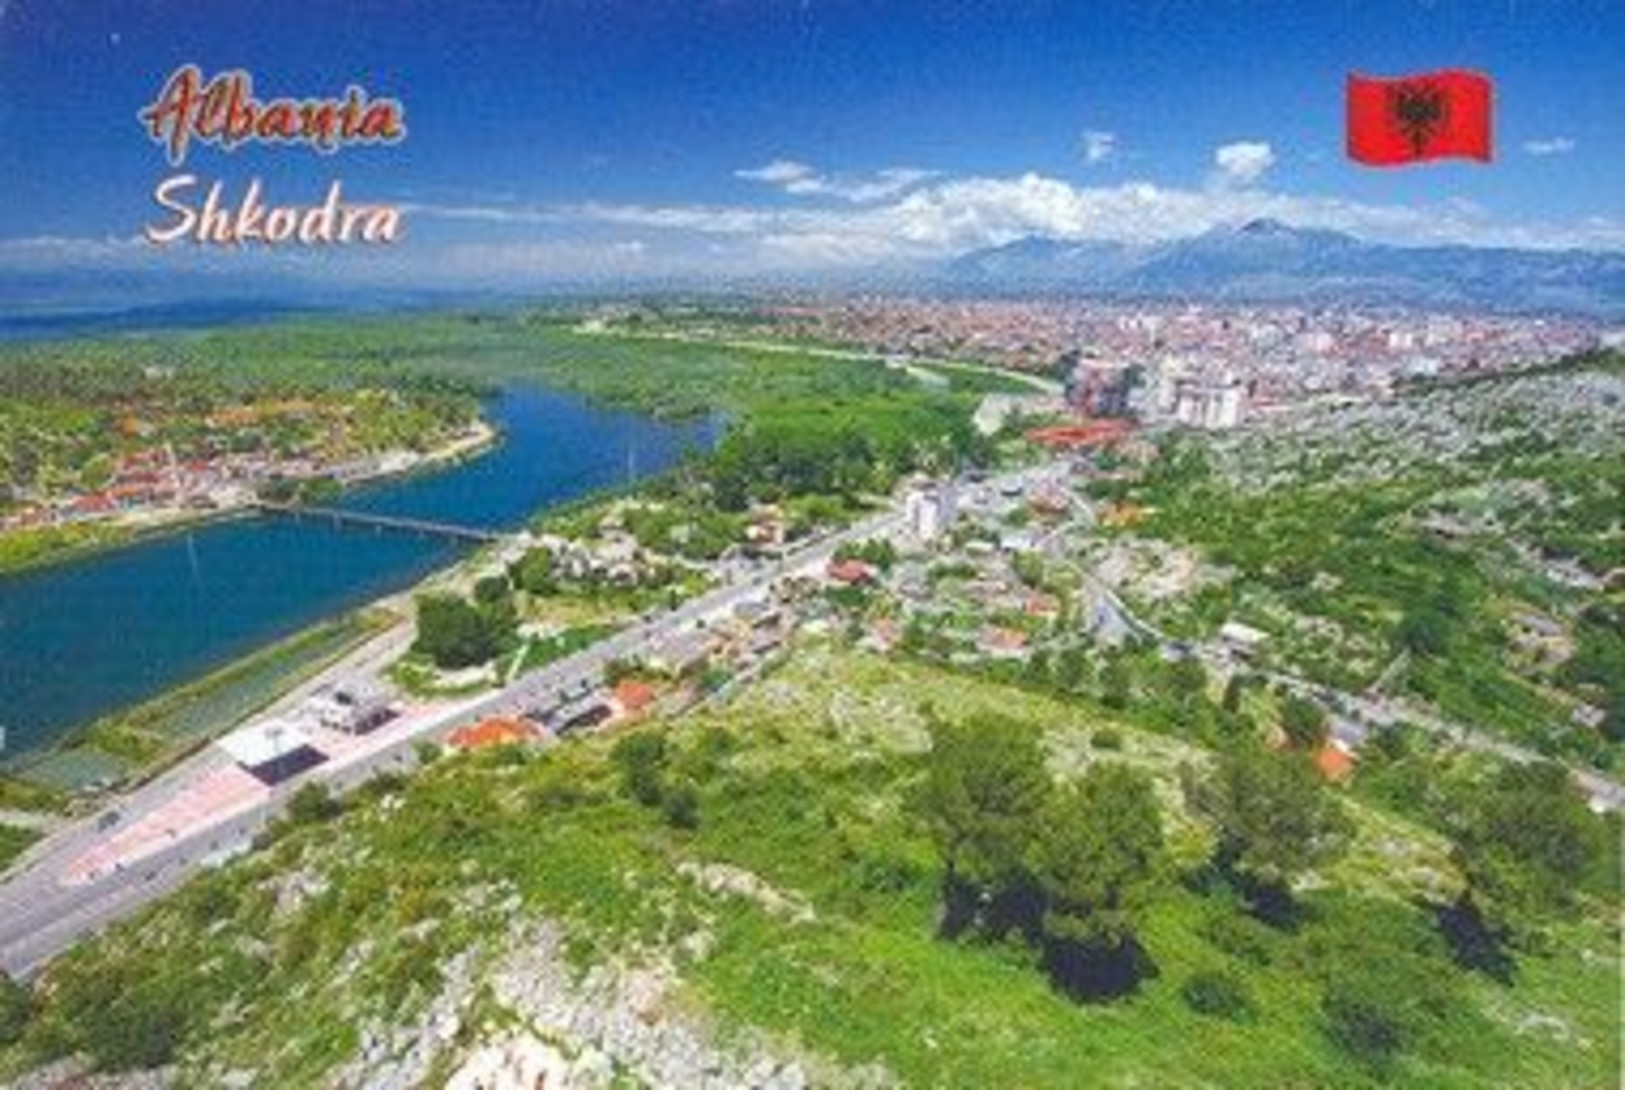 Lot Collection 29x Postcards Albania Tirana Balkan Shqiperia - Albania